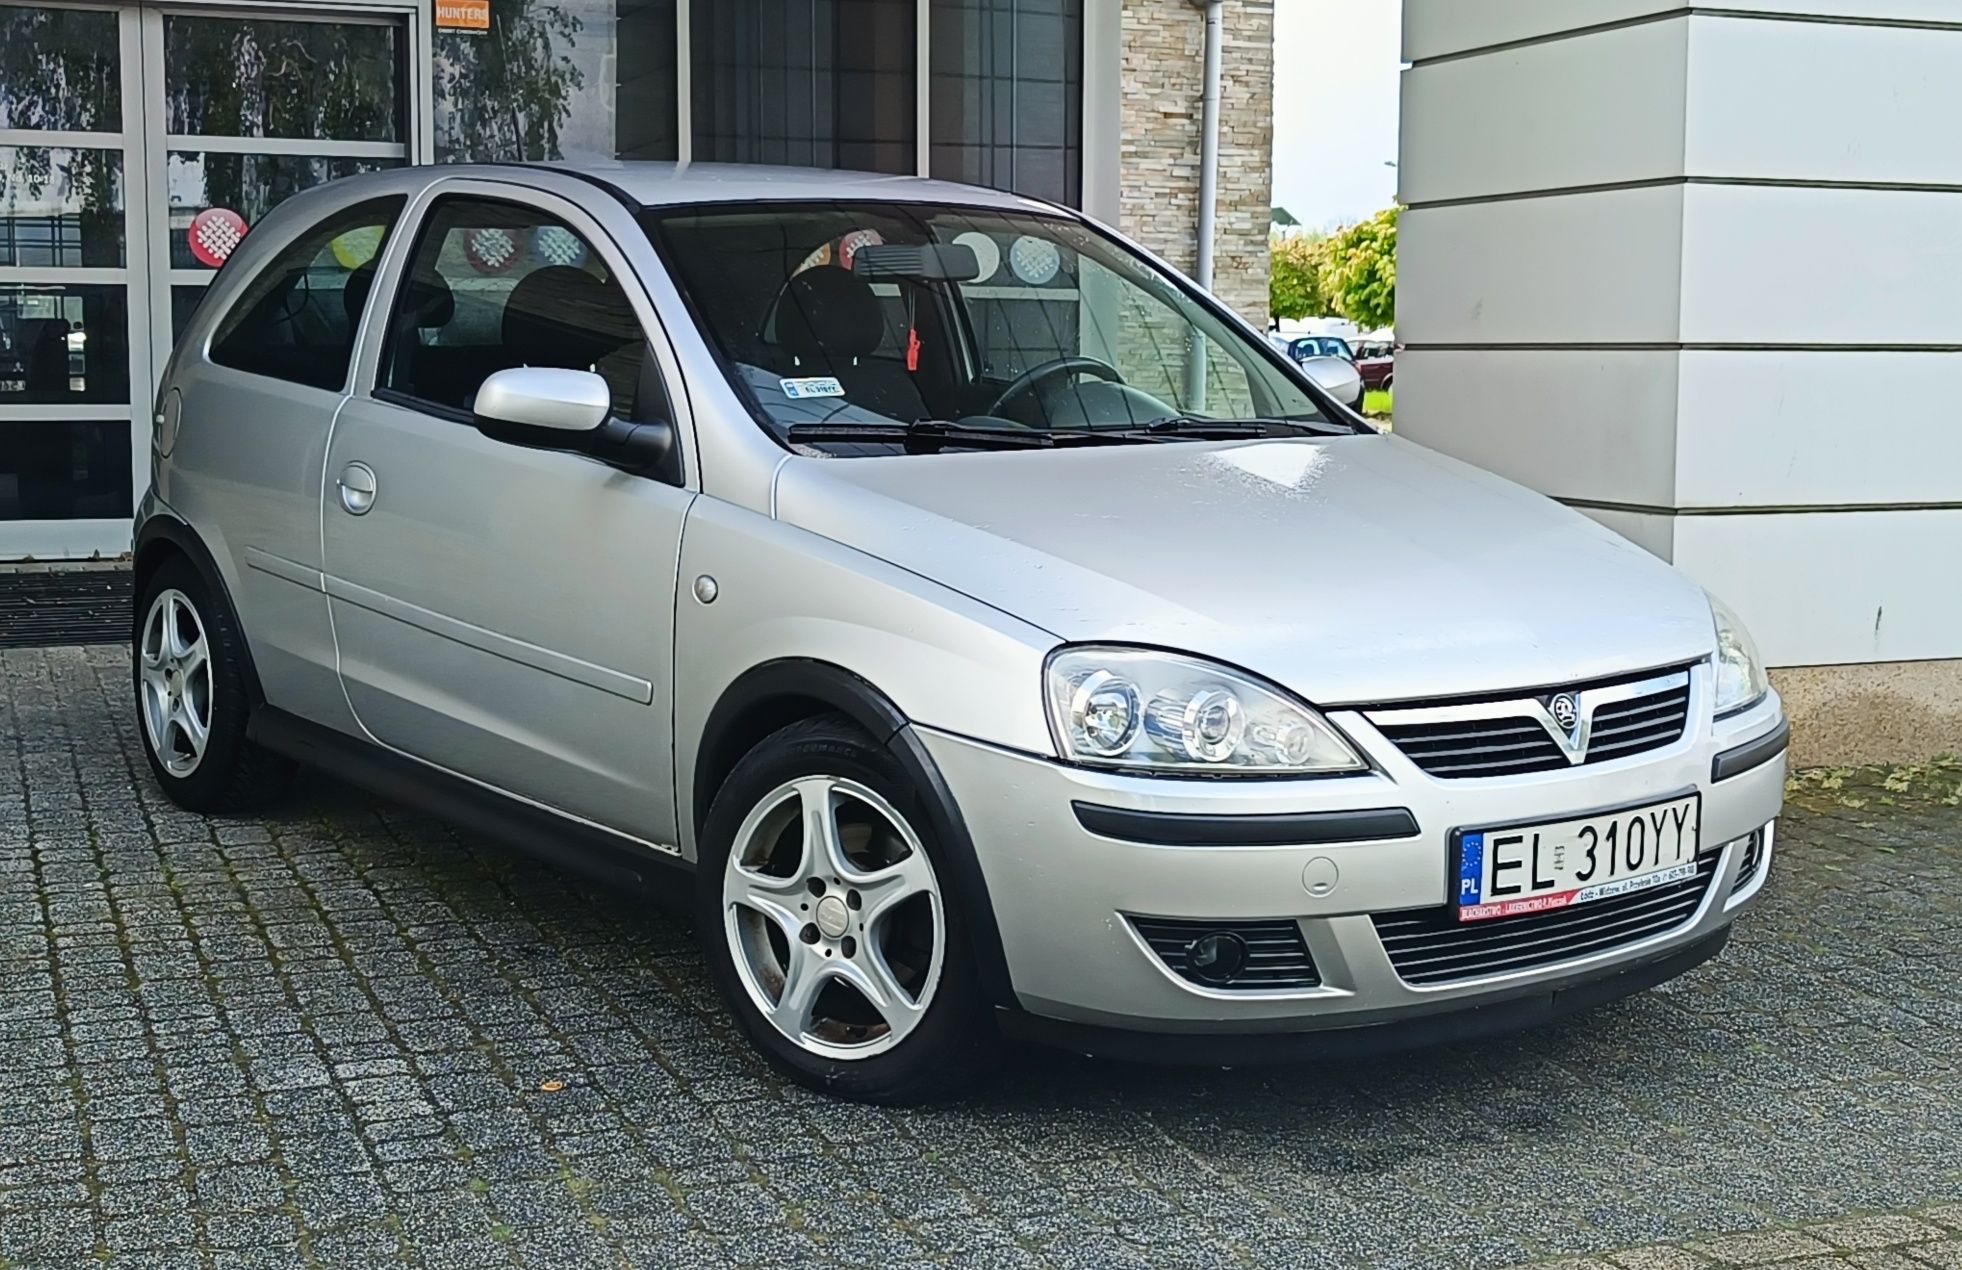 Opel Corsa. 1.3 CDTI. 2005 rok. Klimatyzacja. 2 kpl. Kół.